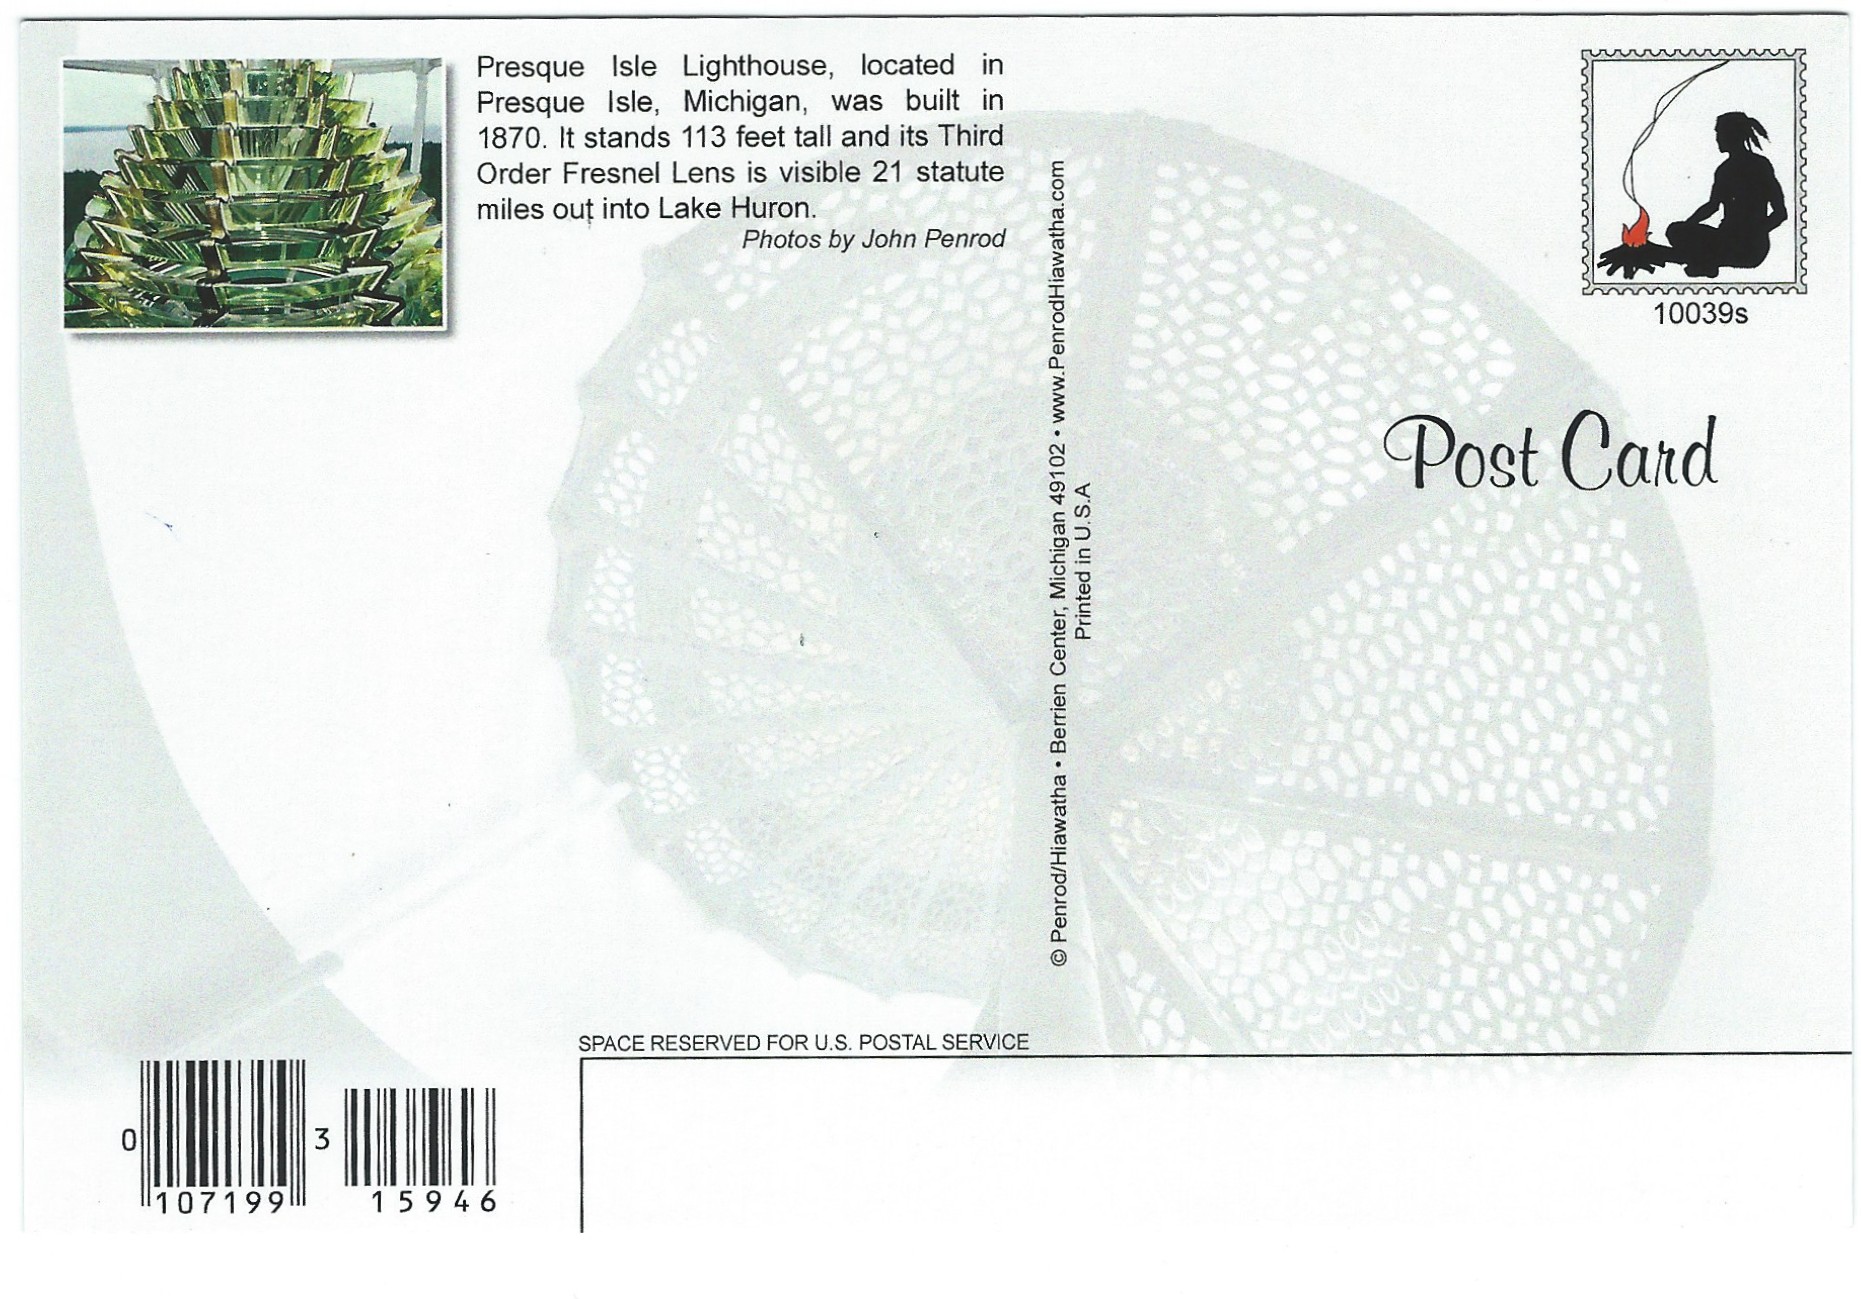 Presque Isle Lighthouse Postcard 10039s (MI)